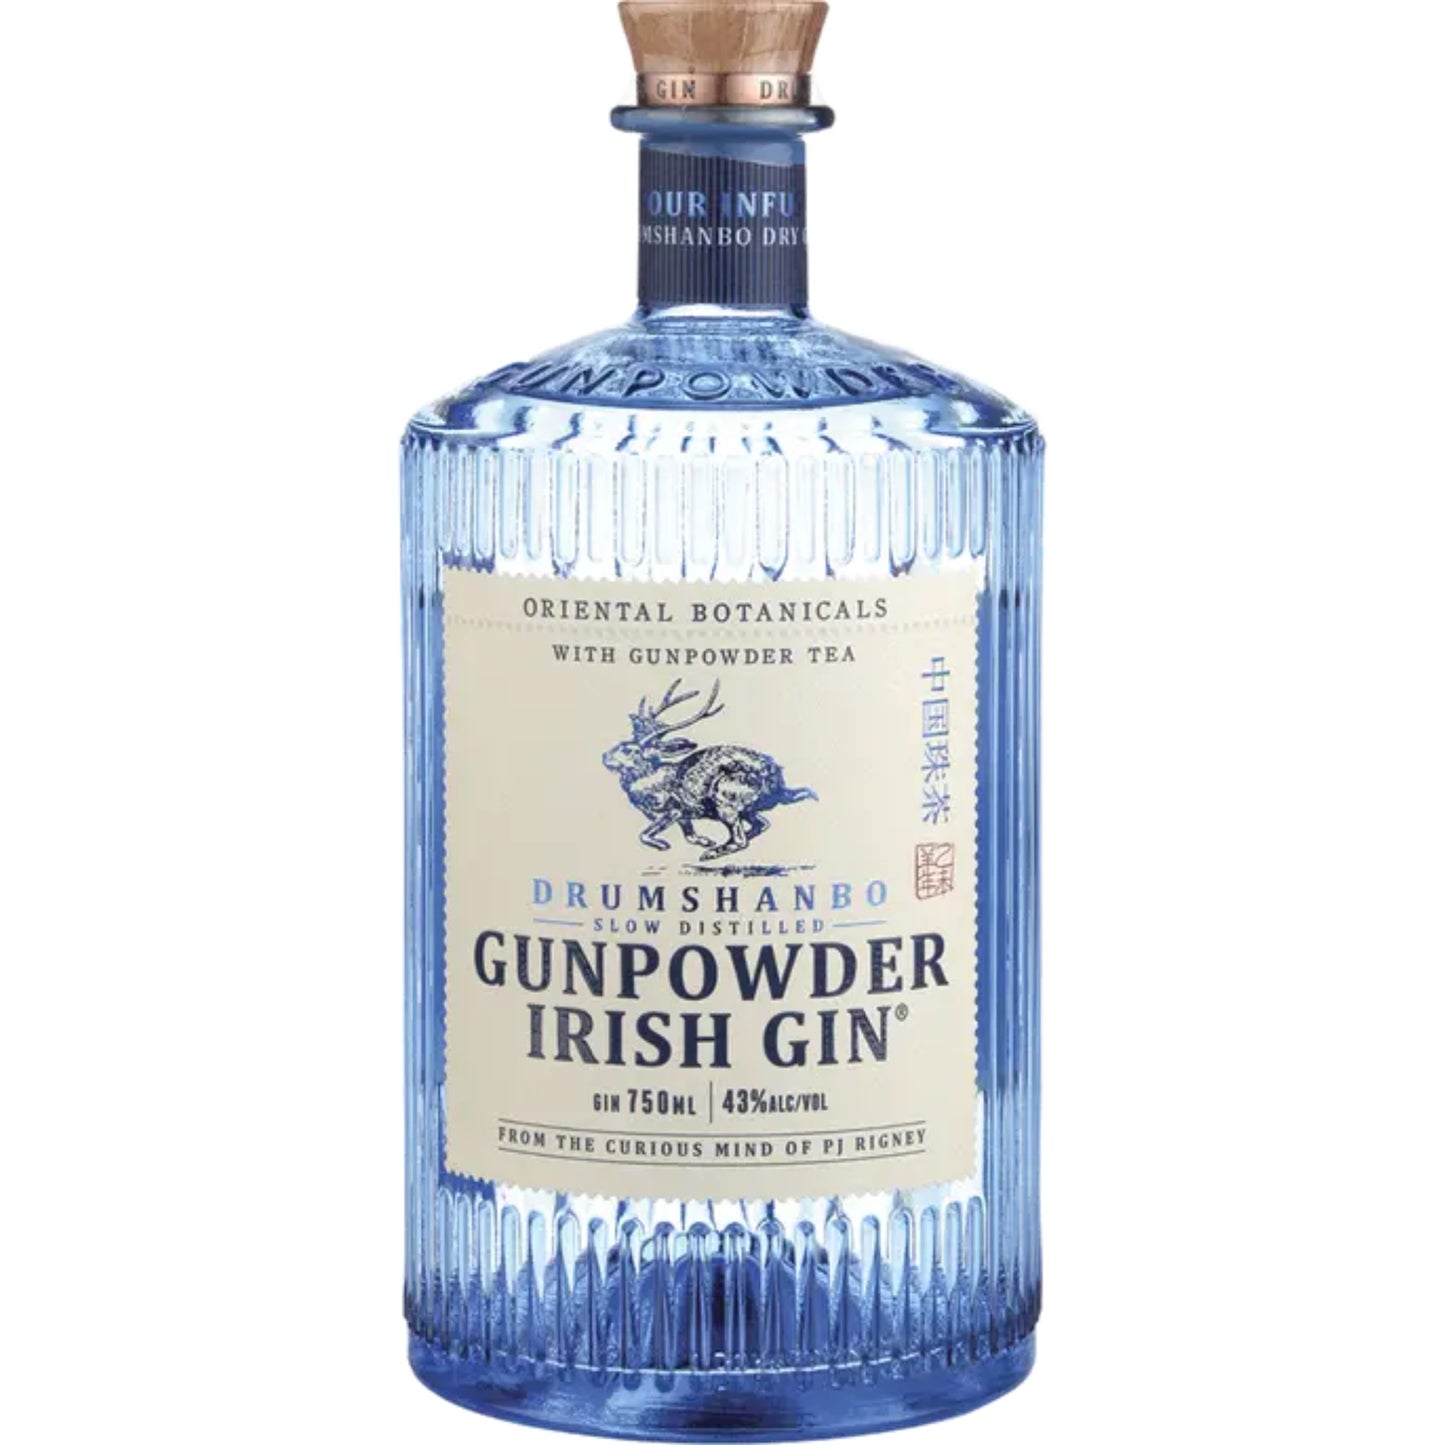 Drumshanbo Gunpowder Irish Gin - Liquor Geeks